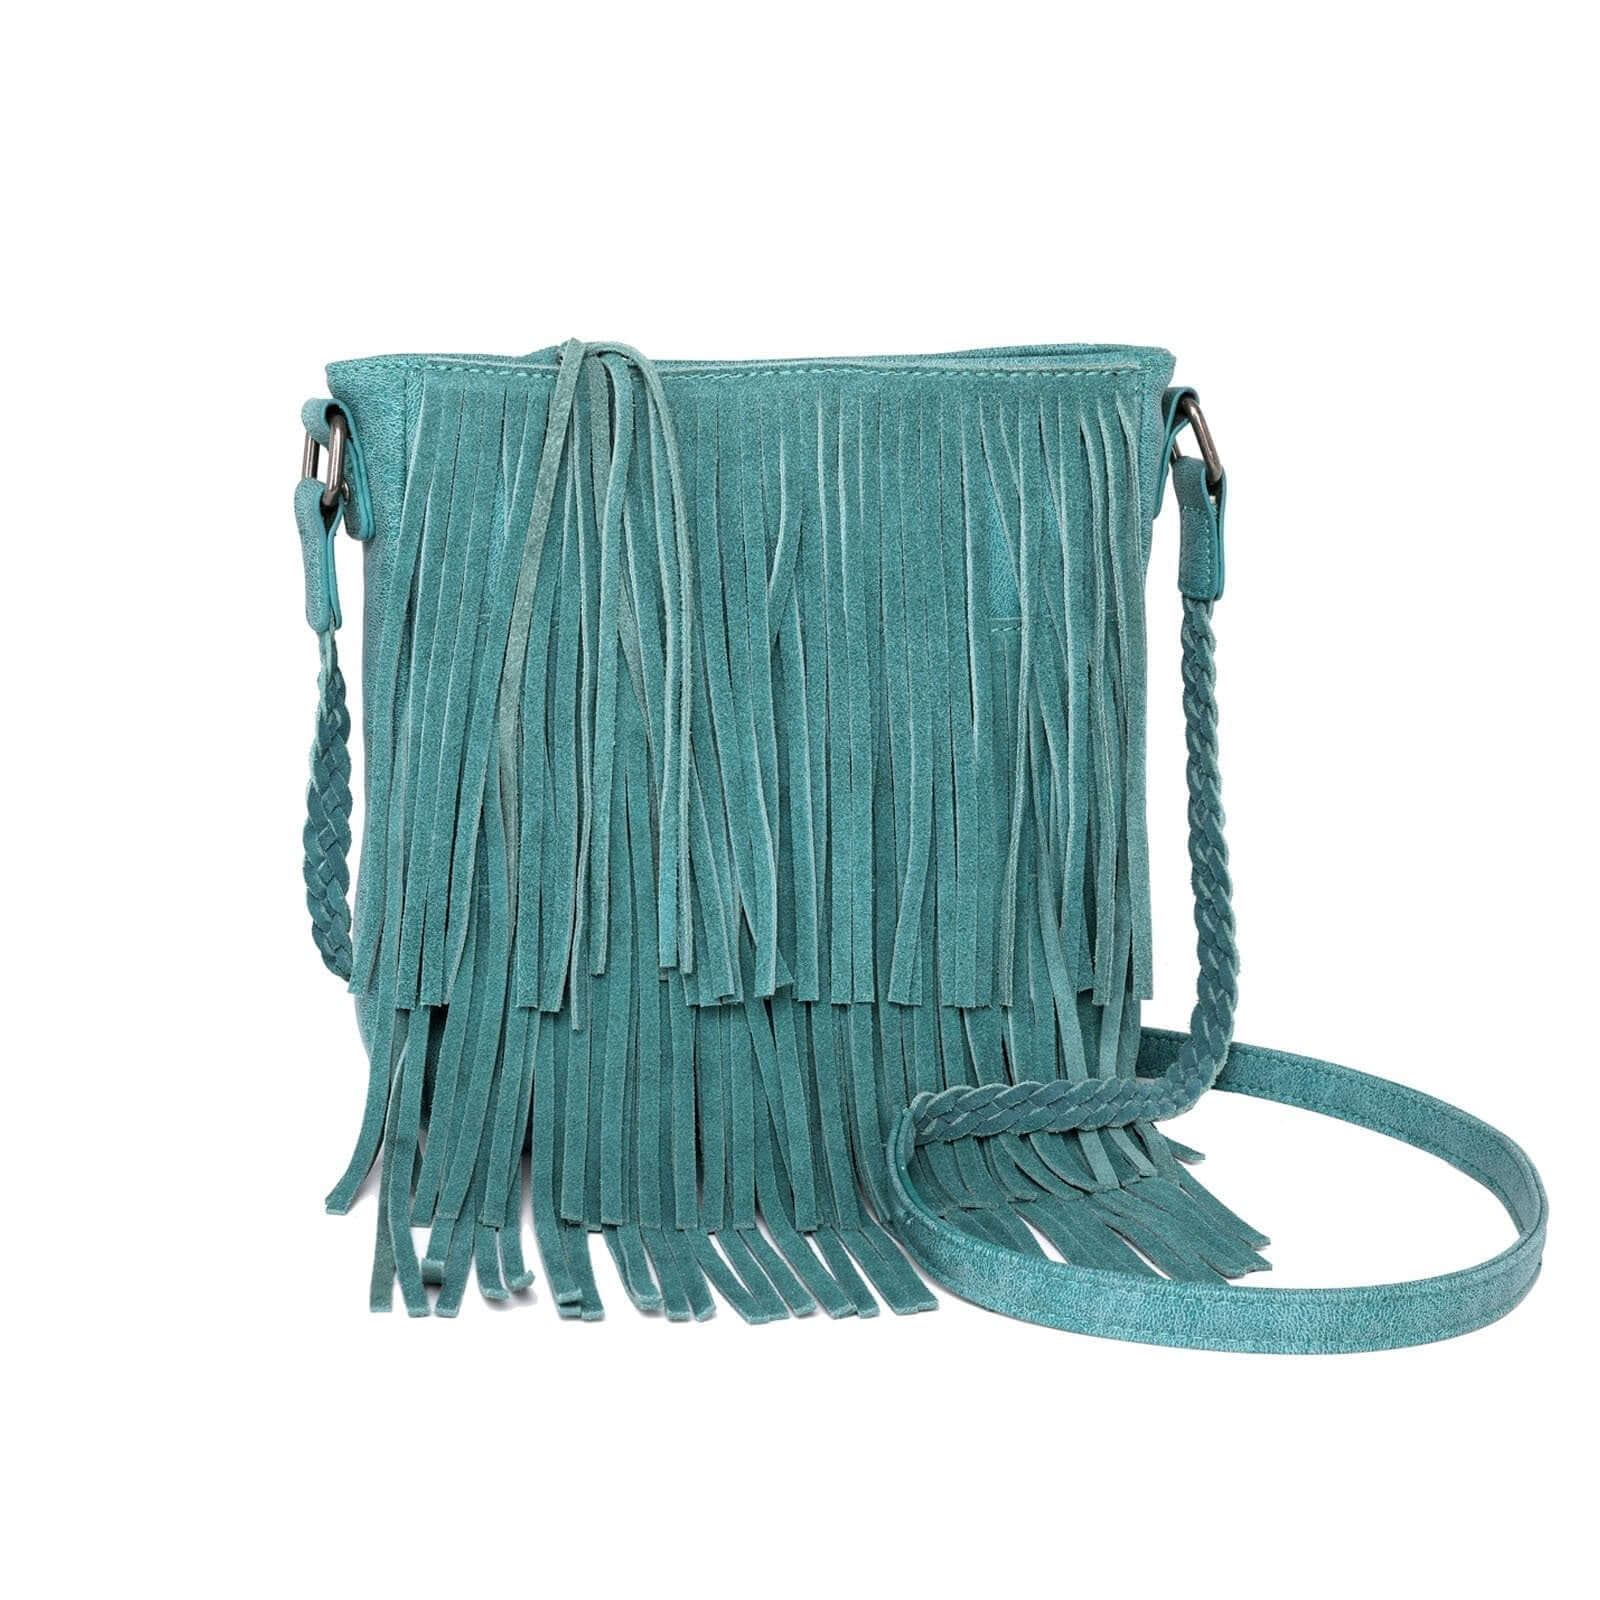 WG11-8360 TQ- Wrangler leather fringe crossbody bag- Turquoise